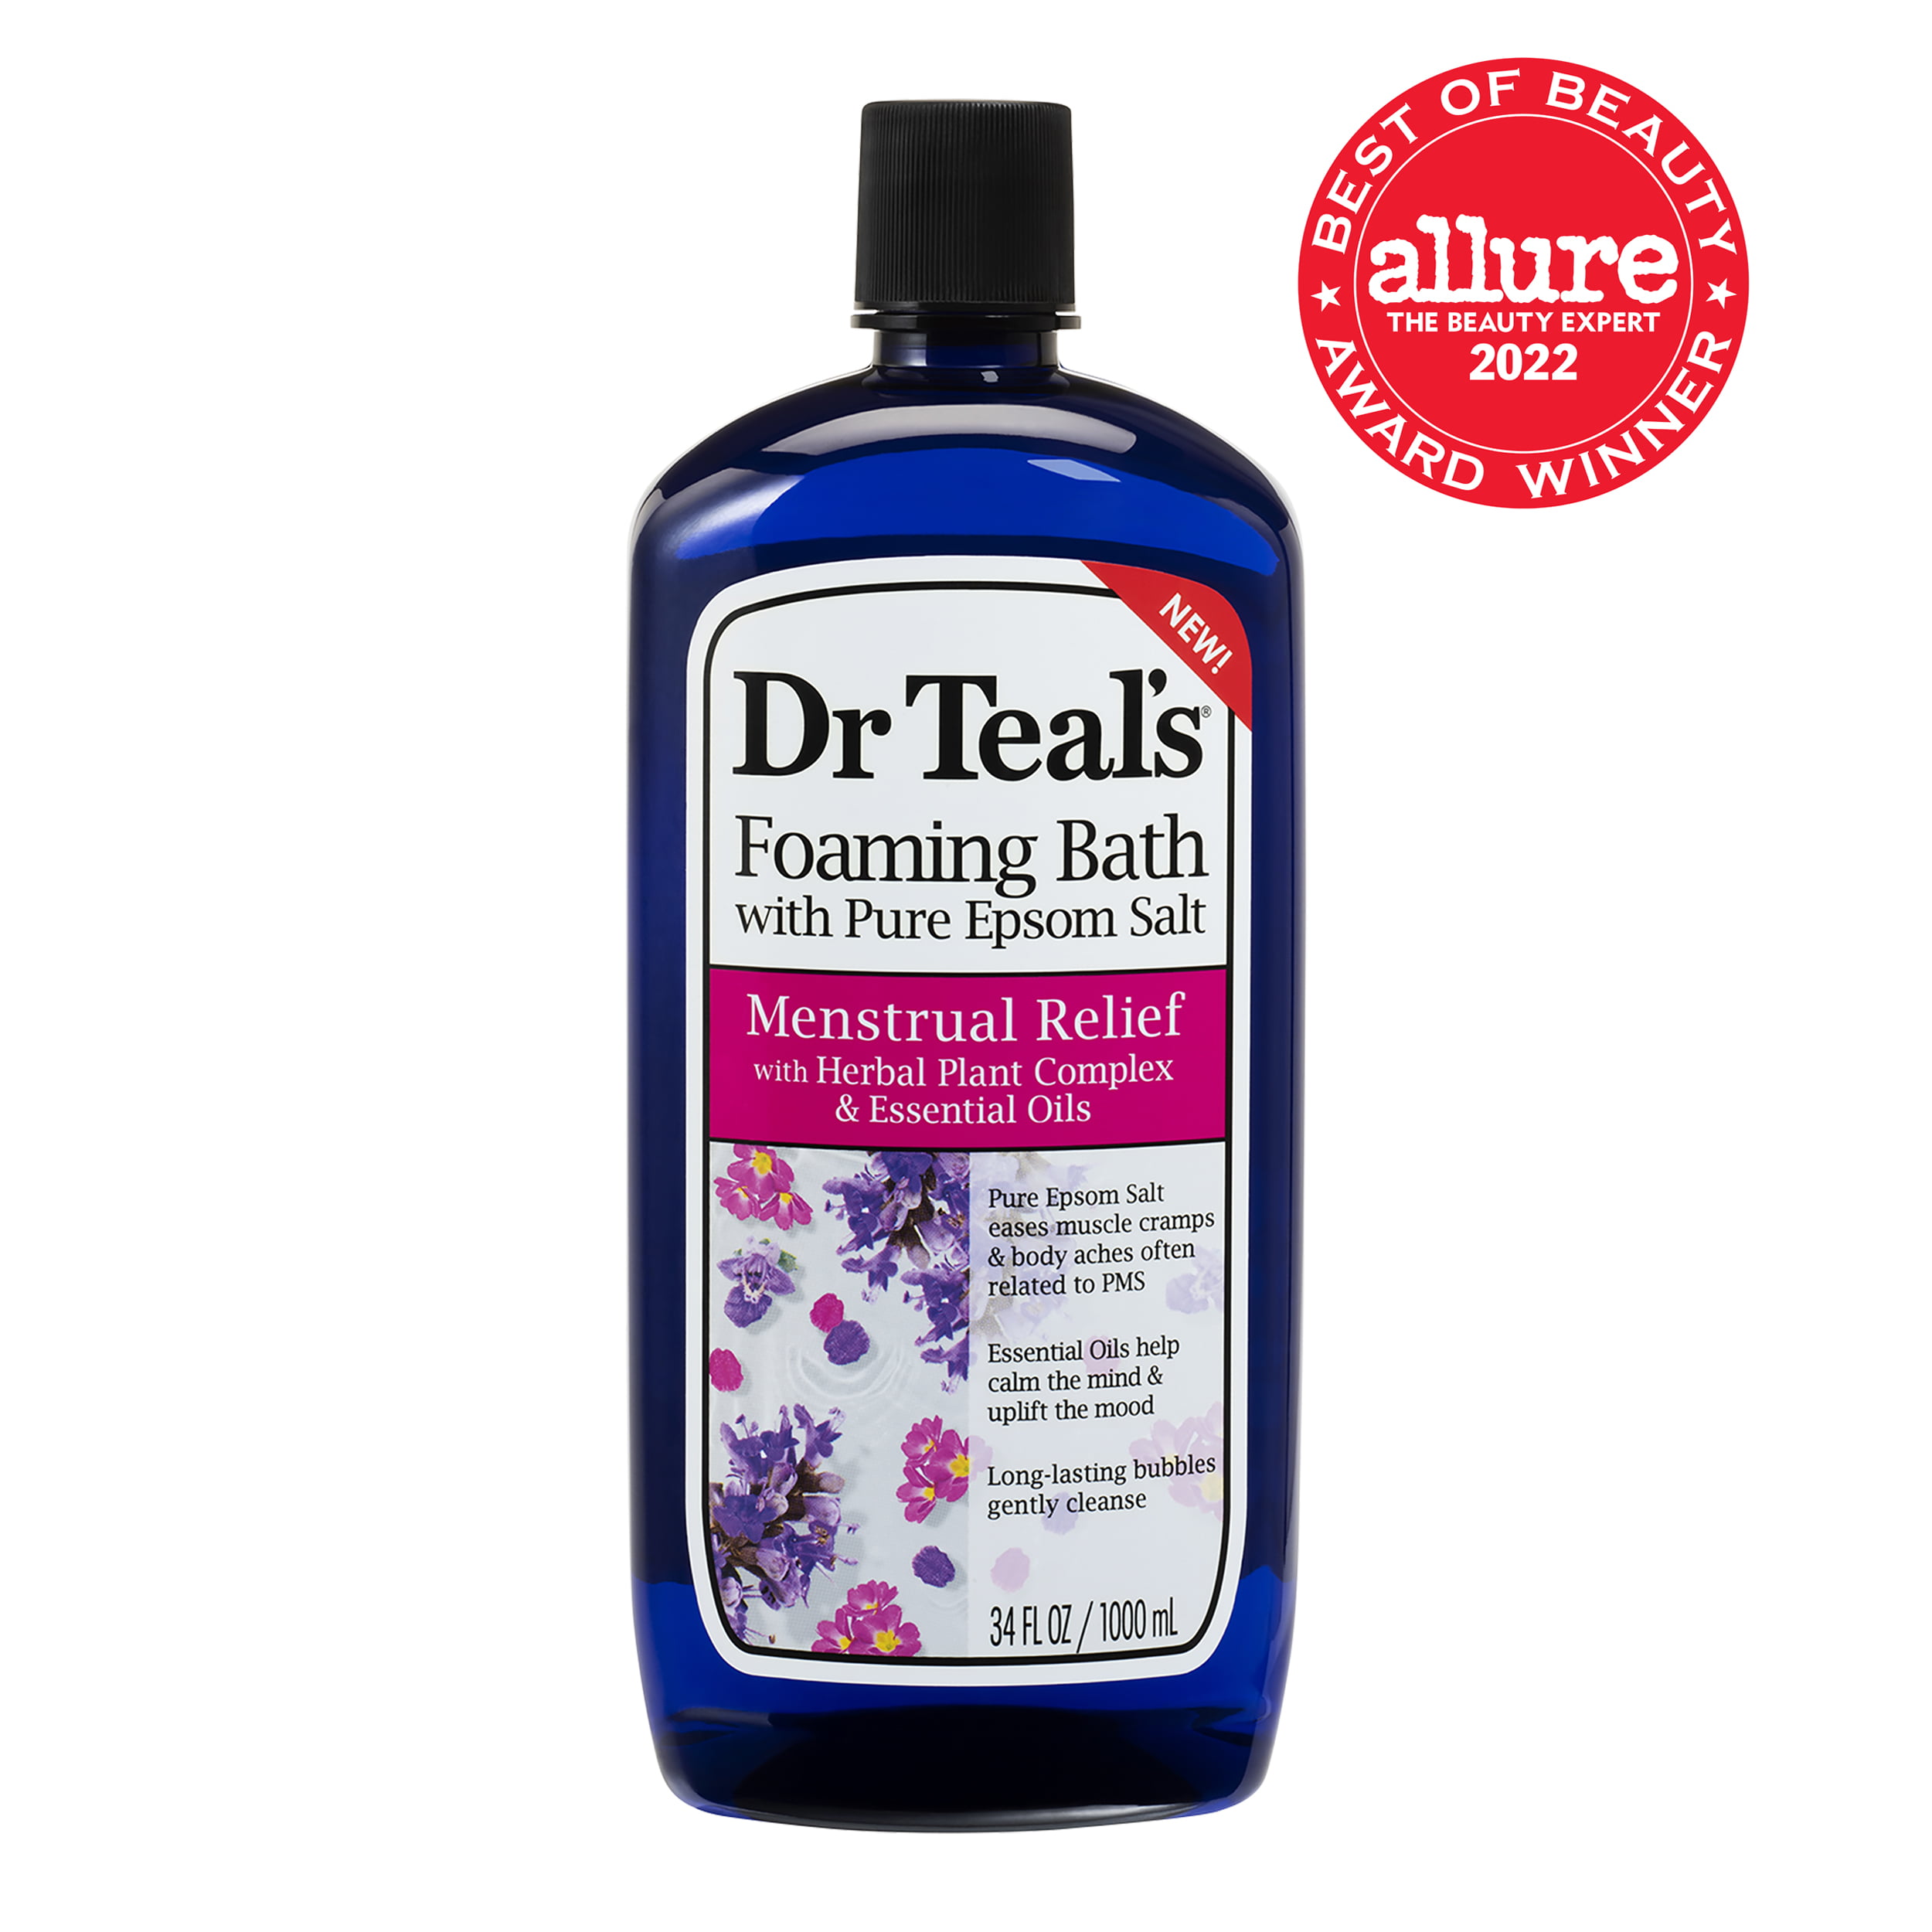 Dr Teal's Menstrual Relief Foaming Bath with Epsom Salt & Herbal Plant Complex, 34 fl oz